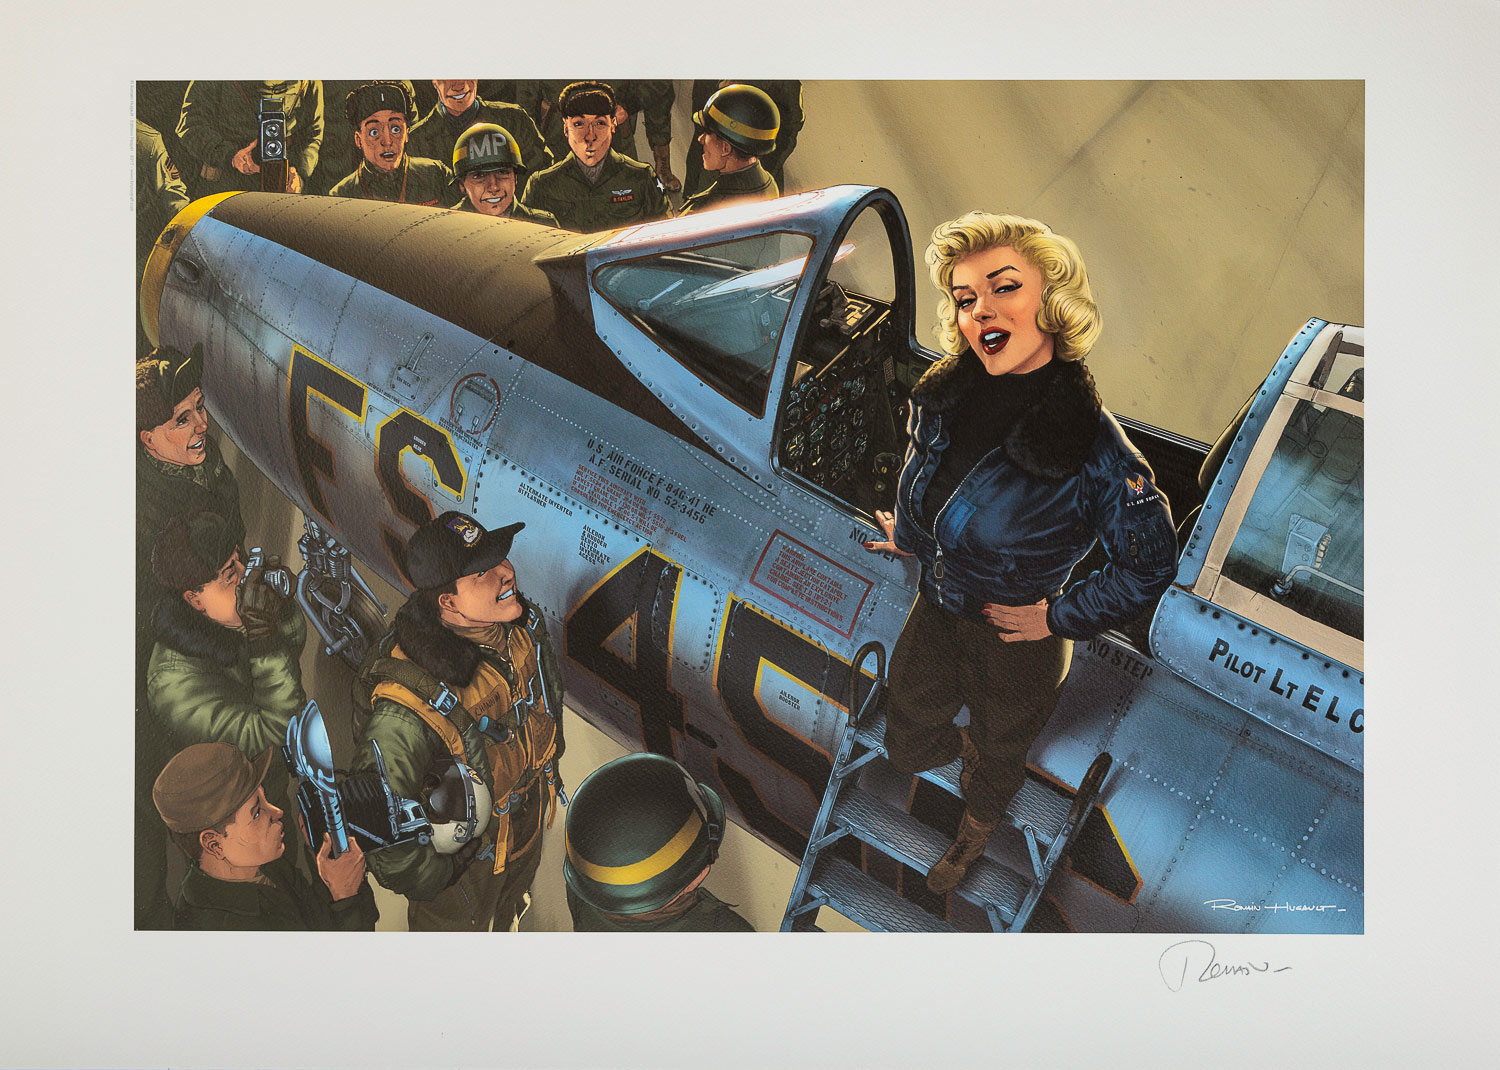 Lámina firmada Romain Hugault : Marilyn, North American F-100 Super Sabre